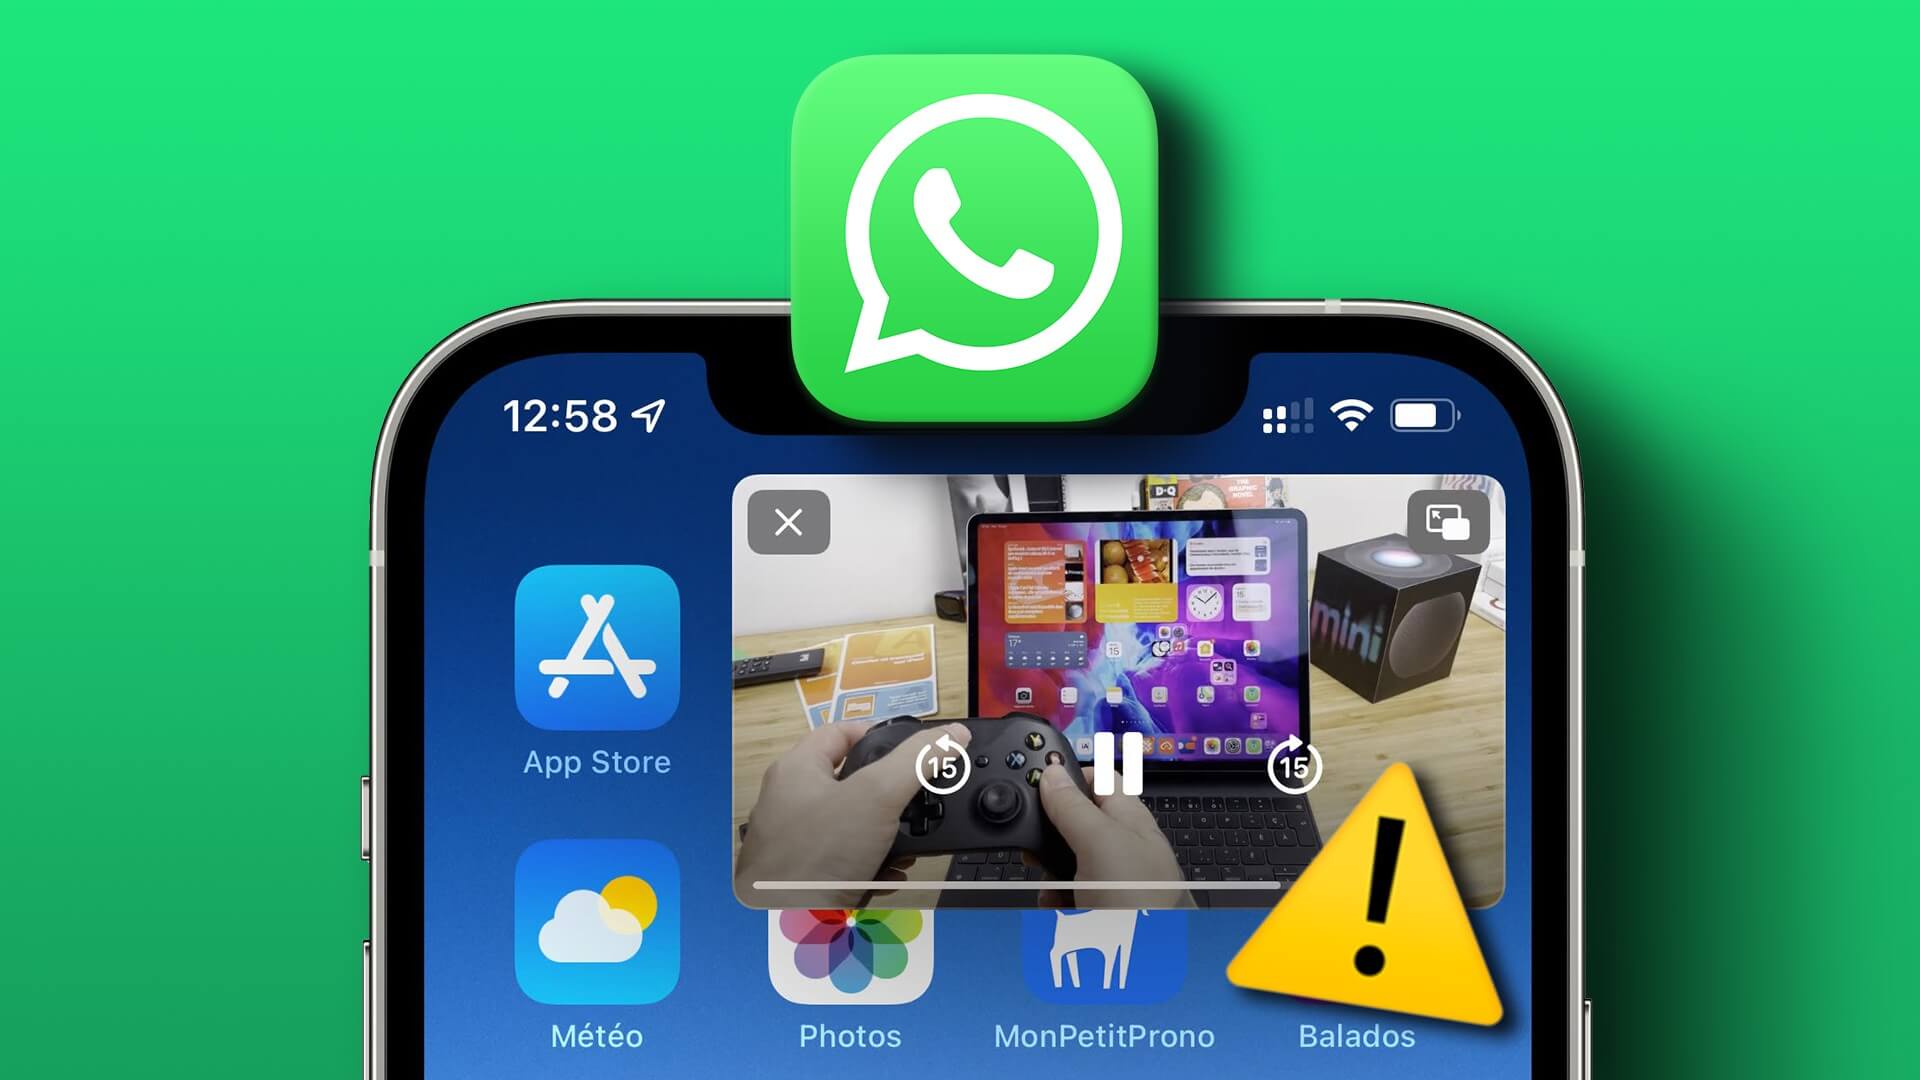 أفضل 5 إصلاحات لعدم عمل ميزة Picture in Picture في WhatsApp على iPhone - %categories